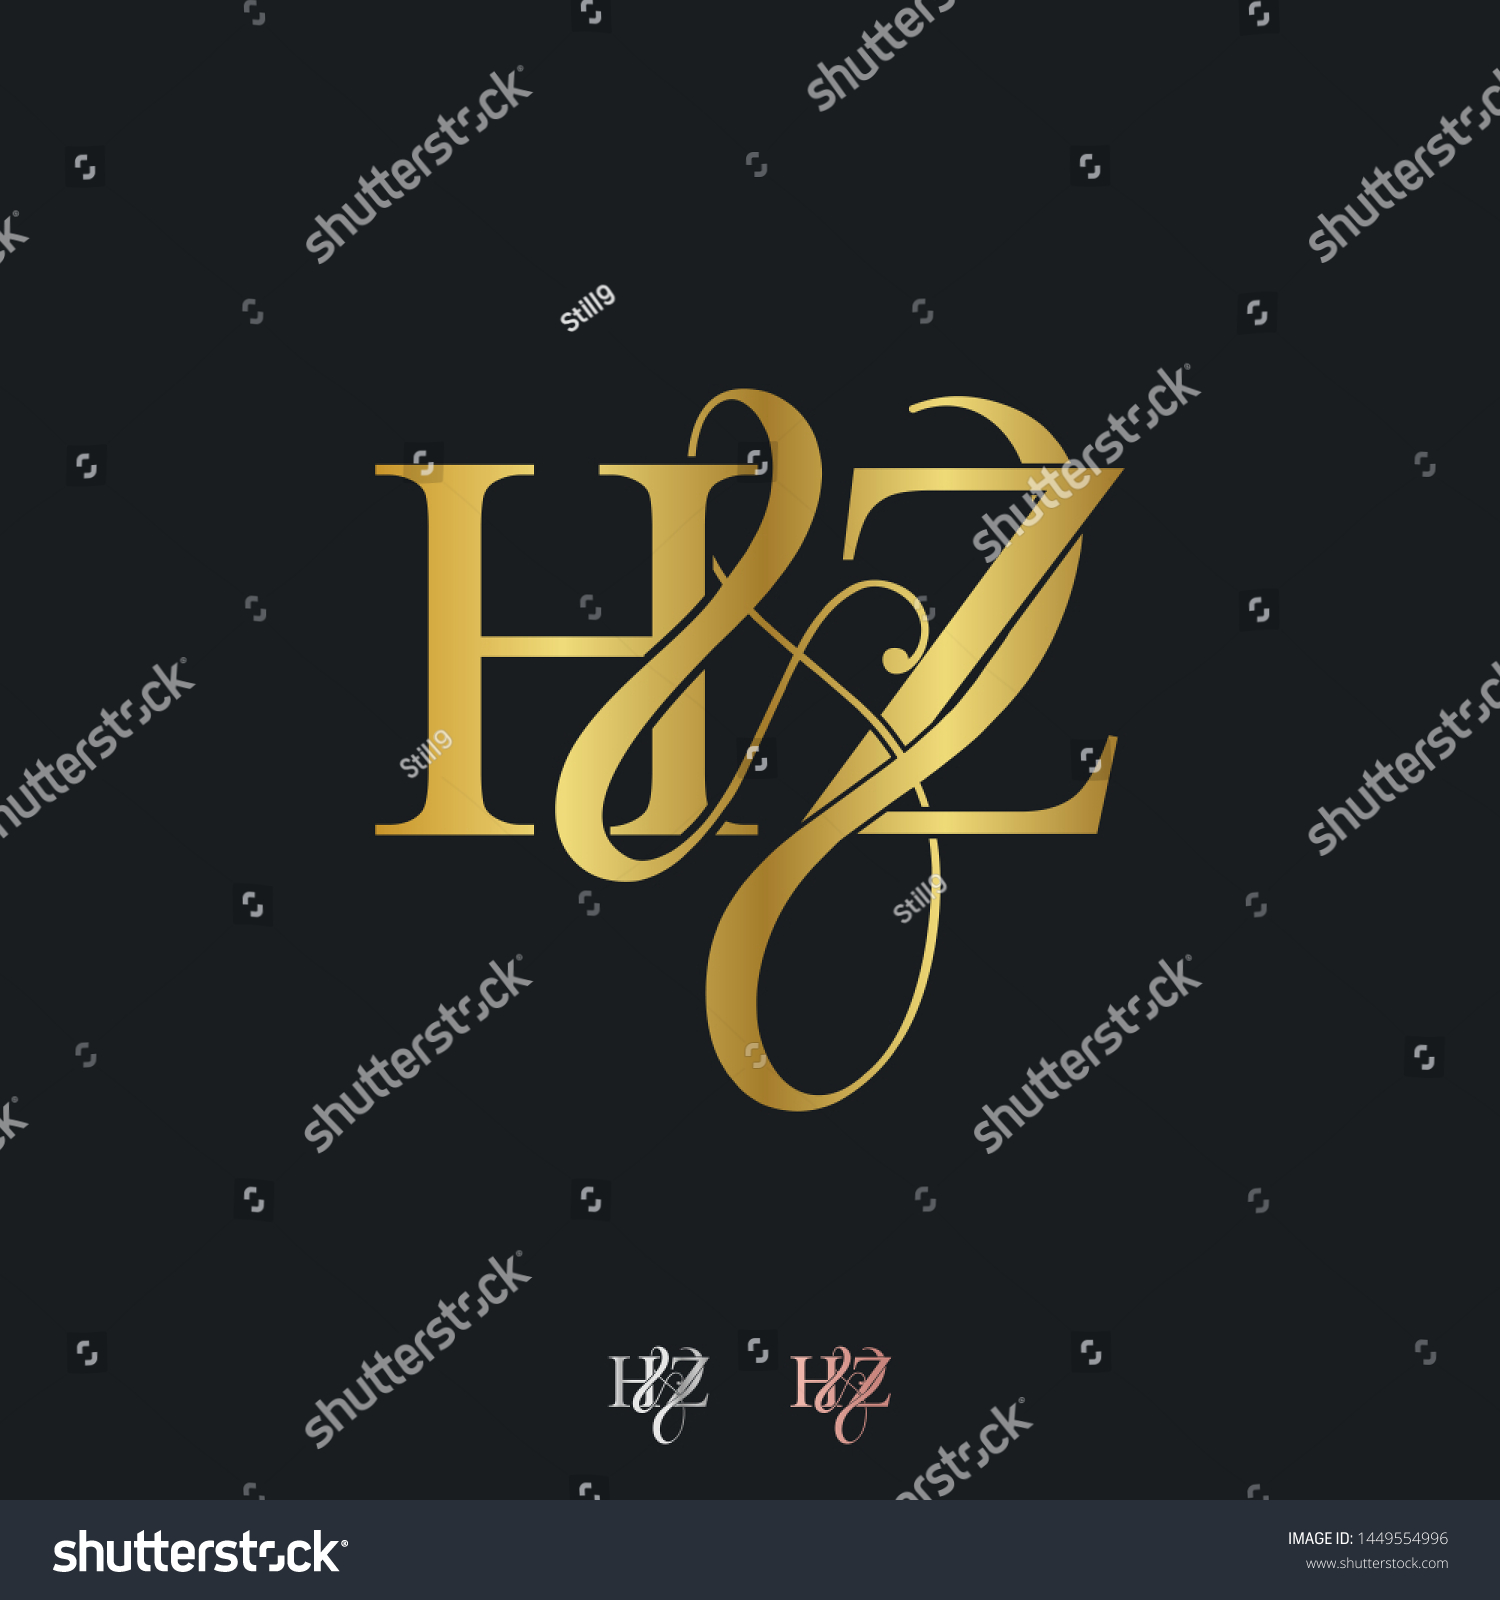 H Z Hz Logo Initial Vector เวกเตอร์สต็อก ปลอดค่าลิขสิทธิ์ 1449554996 Shutterstock